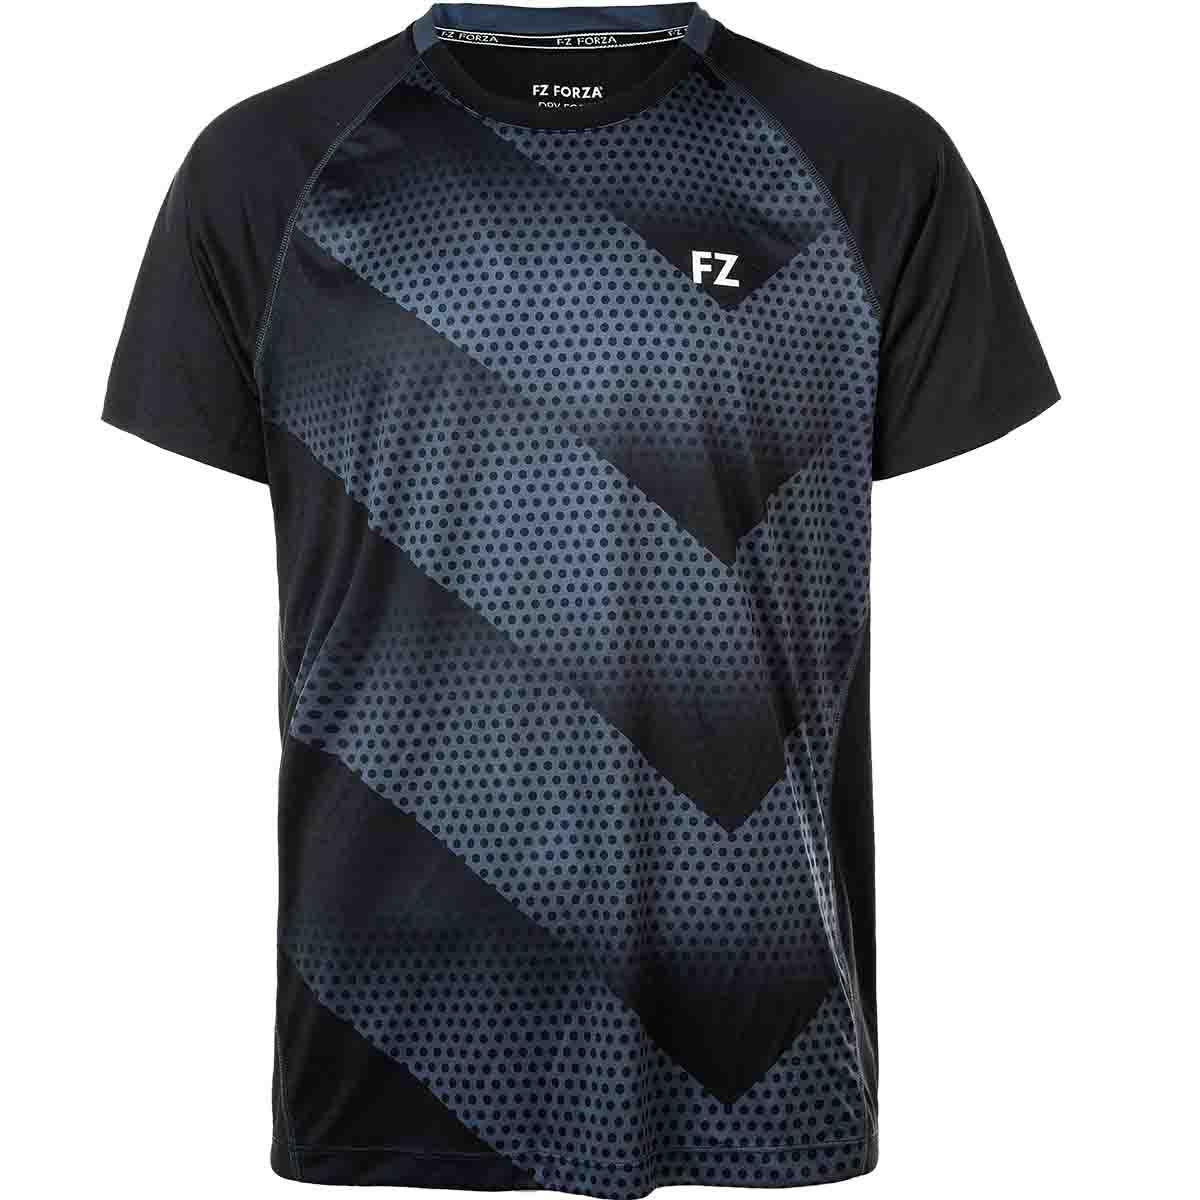 FZ Forza Monthy Junior Badminton T-Shirt - 1070 Steel Grey